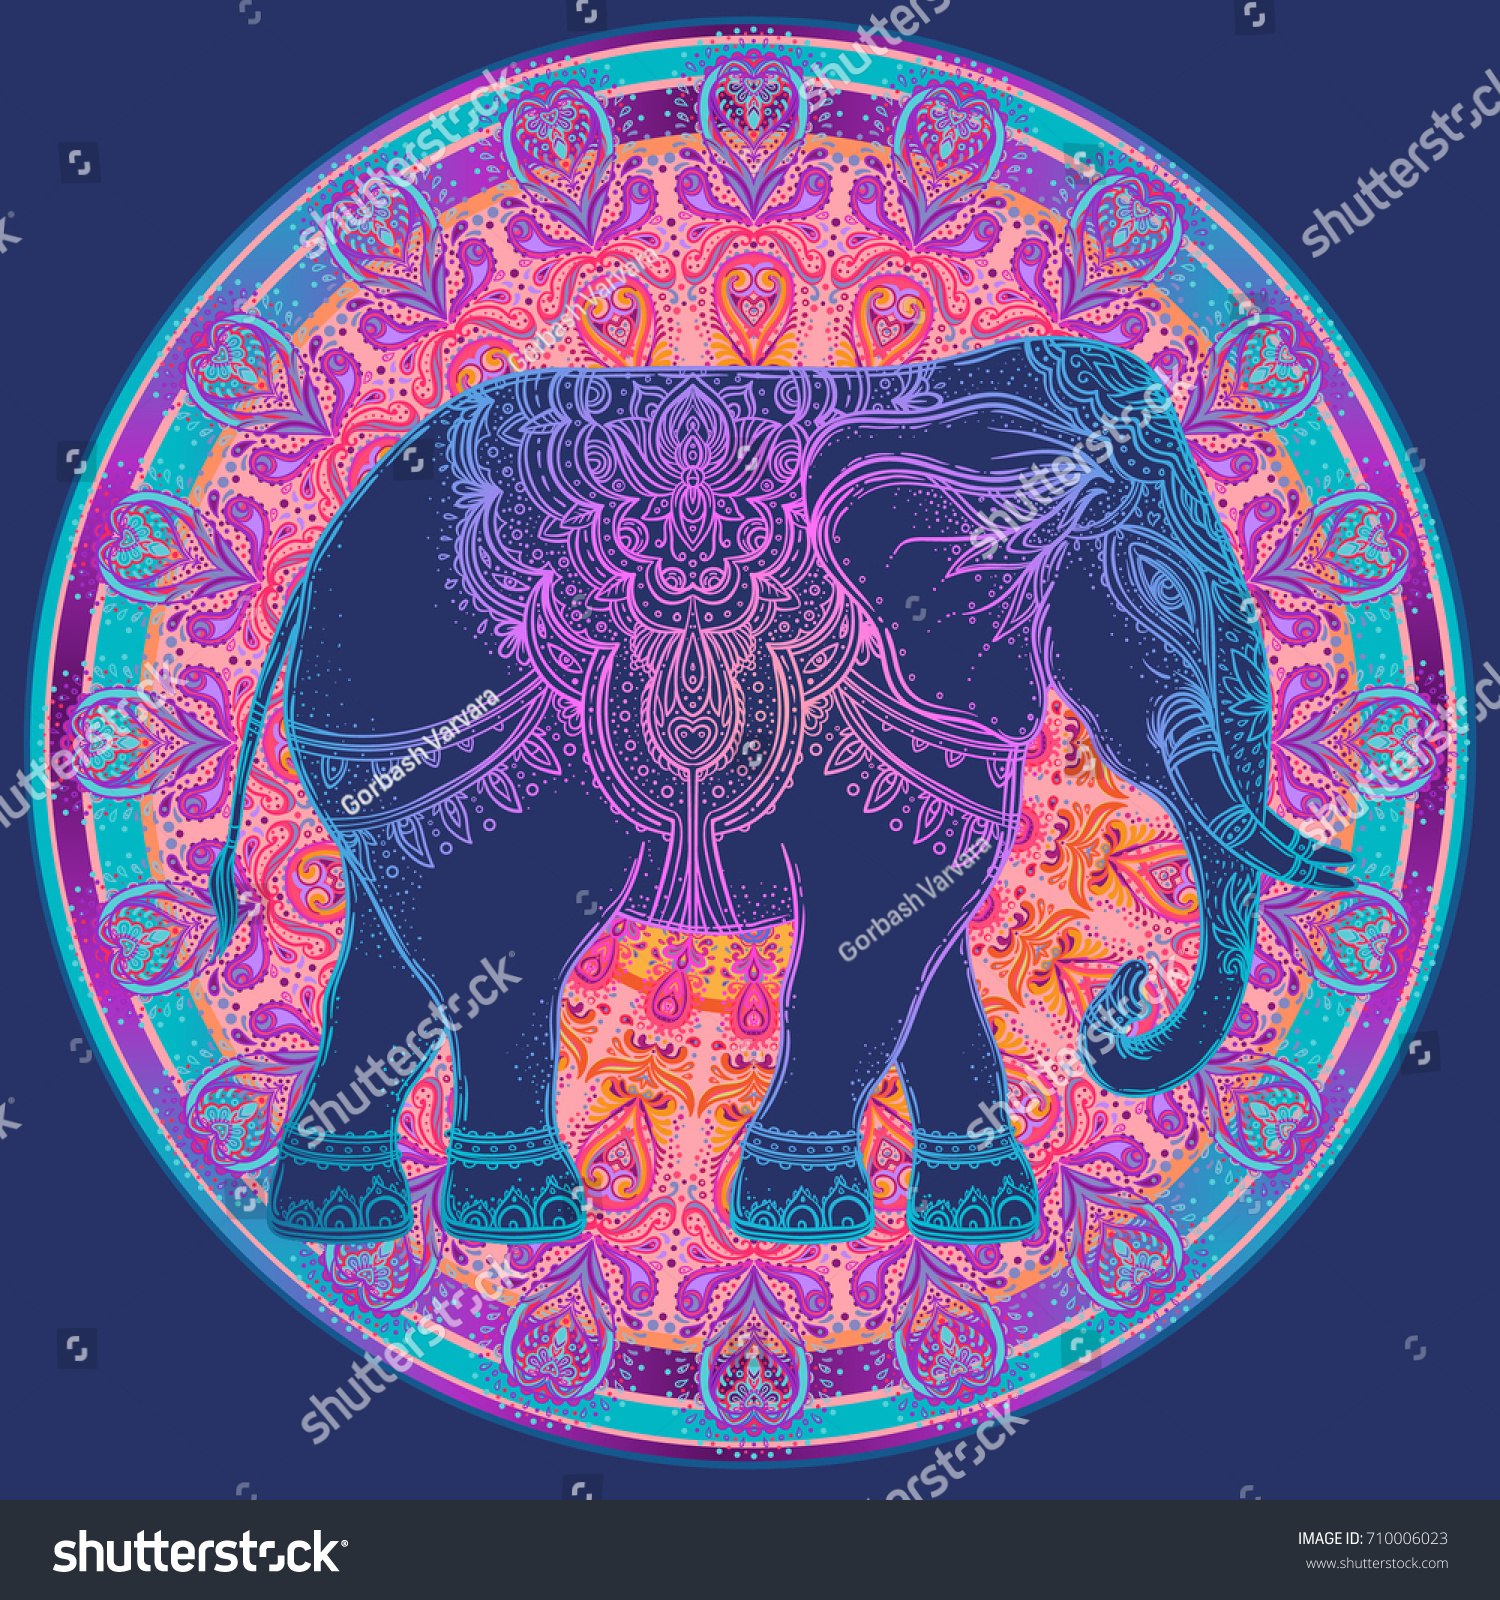 SVG of Beautiful hand-drawn tribal style elephant over mandala. Colorful design with boho pattern, psychedelic ornaments. Ethnic poster, spiritual art, yoga. Indian god Ganesha, Indian symbol. T-shirt print. svg